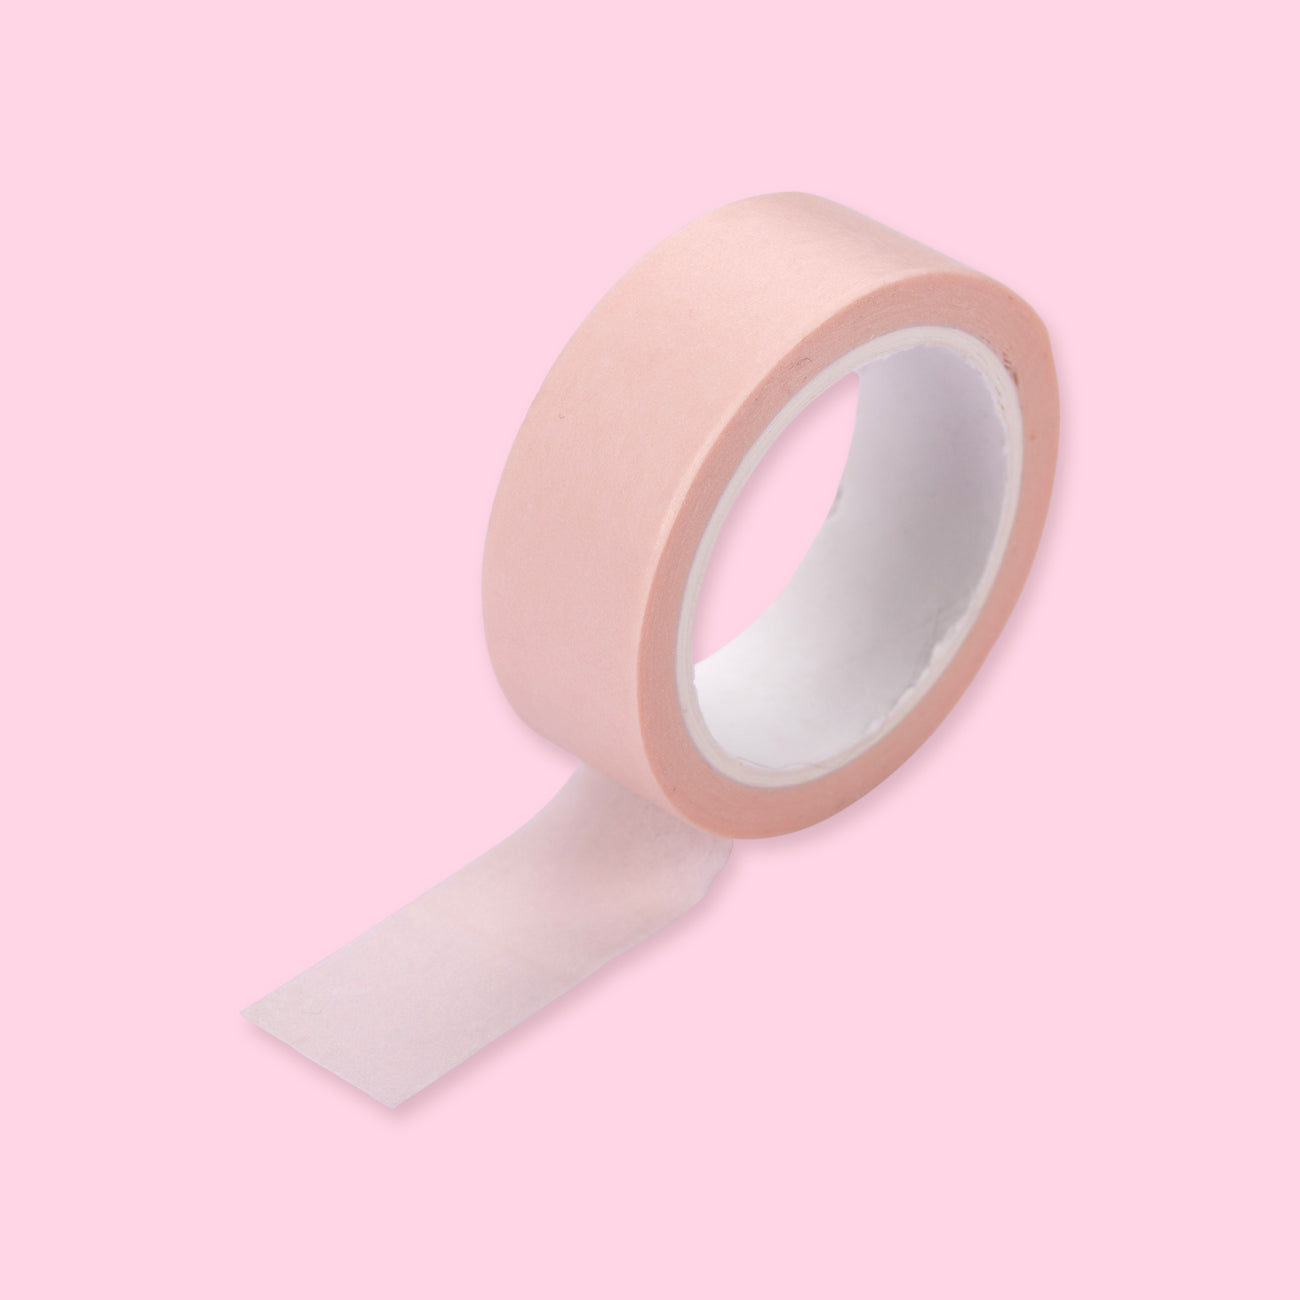 Rose Pink Glitter Washi Tape – beve!